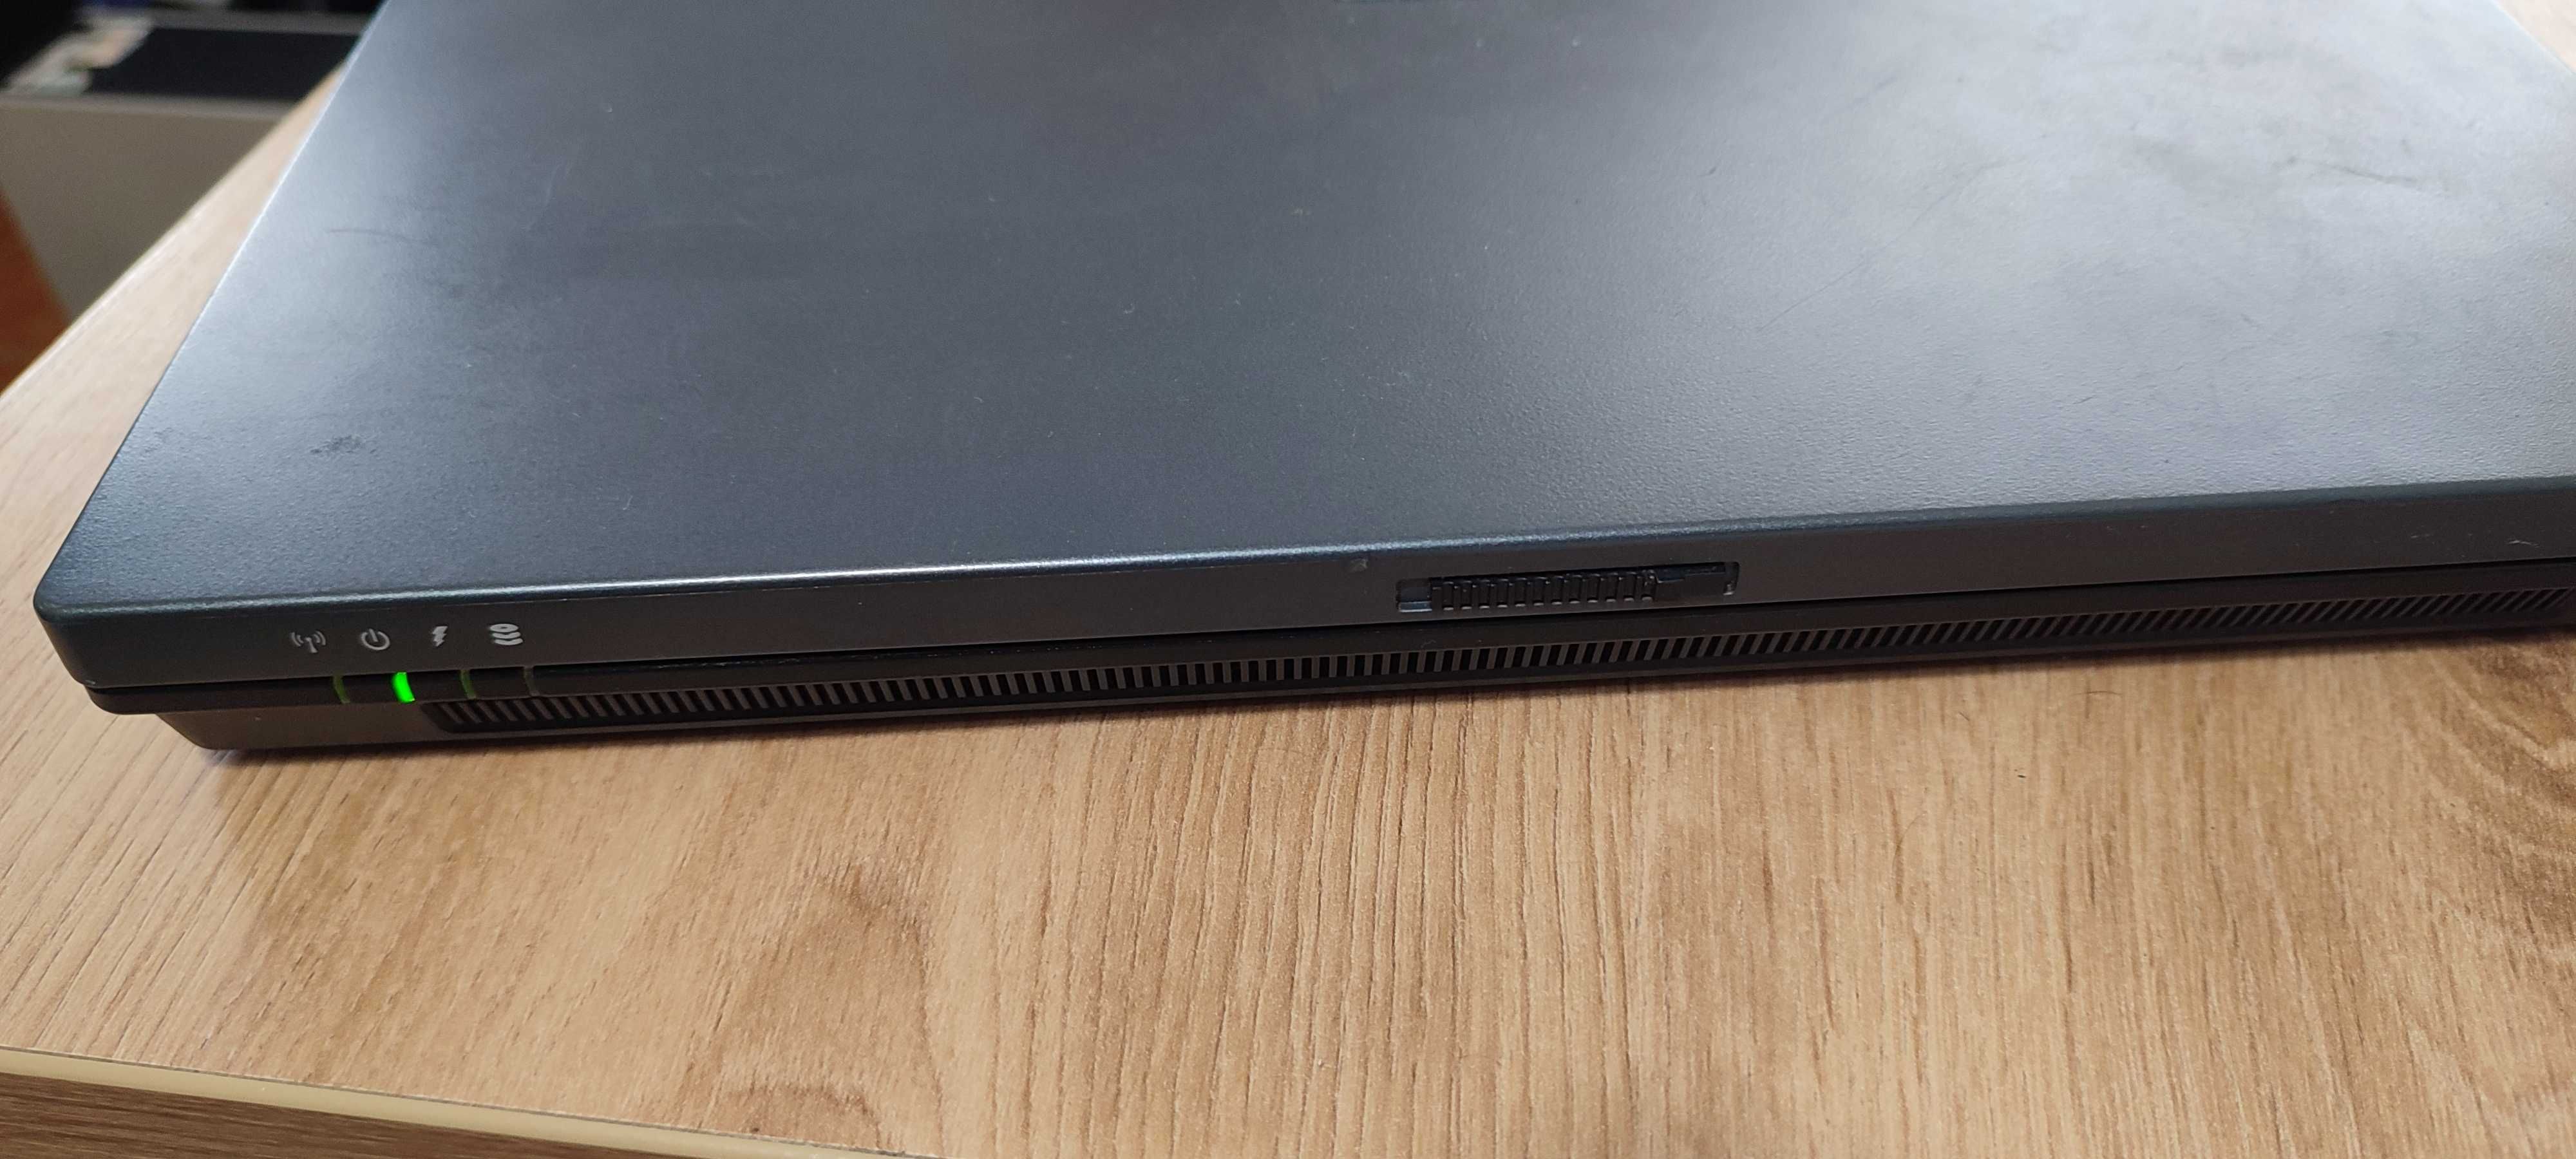 Laptop Compaq NX6110